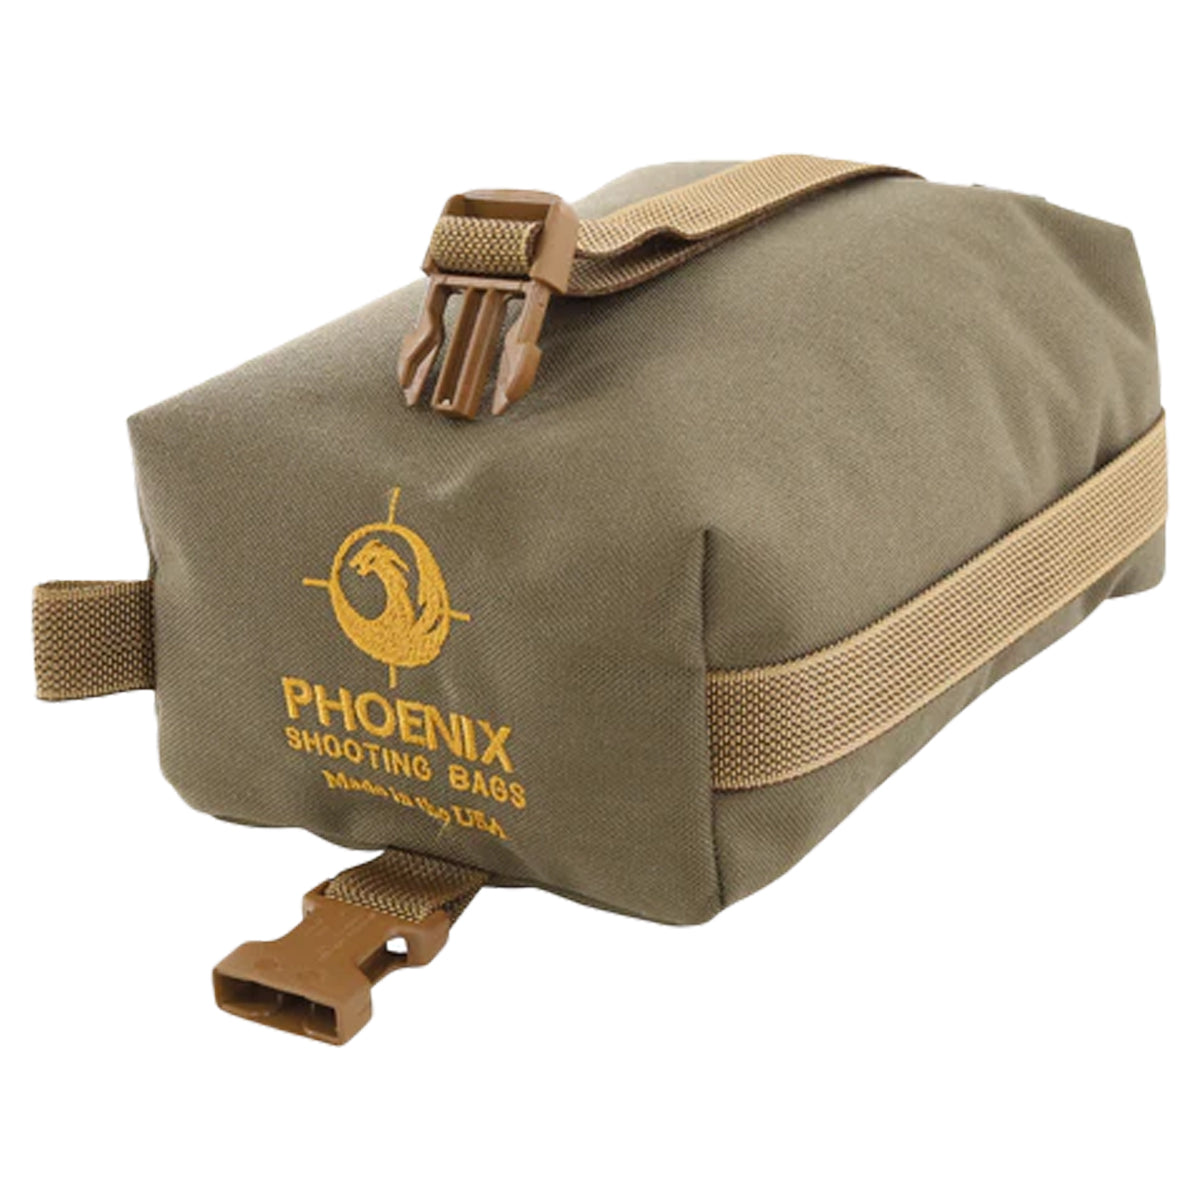 Phoenix Shooting Bags Small Ridge Runner in Ranger Green by GOHUNT | Phoenix Shooting Bags - GOHUNT Shop